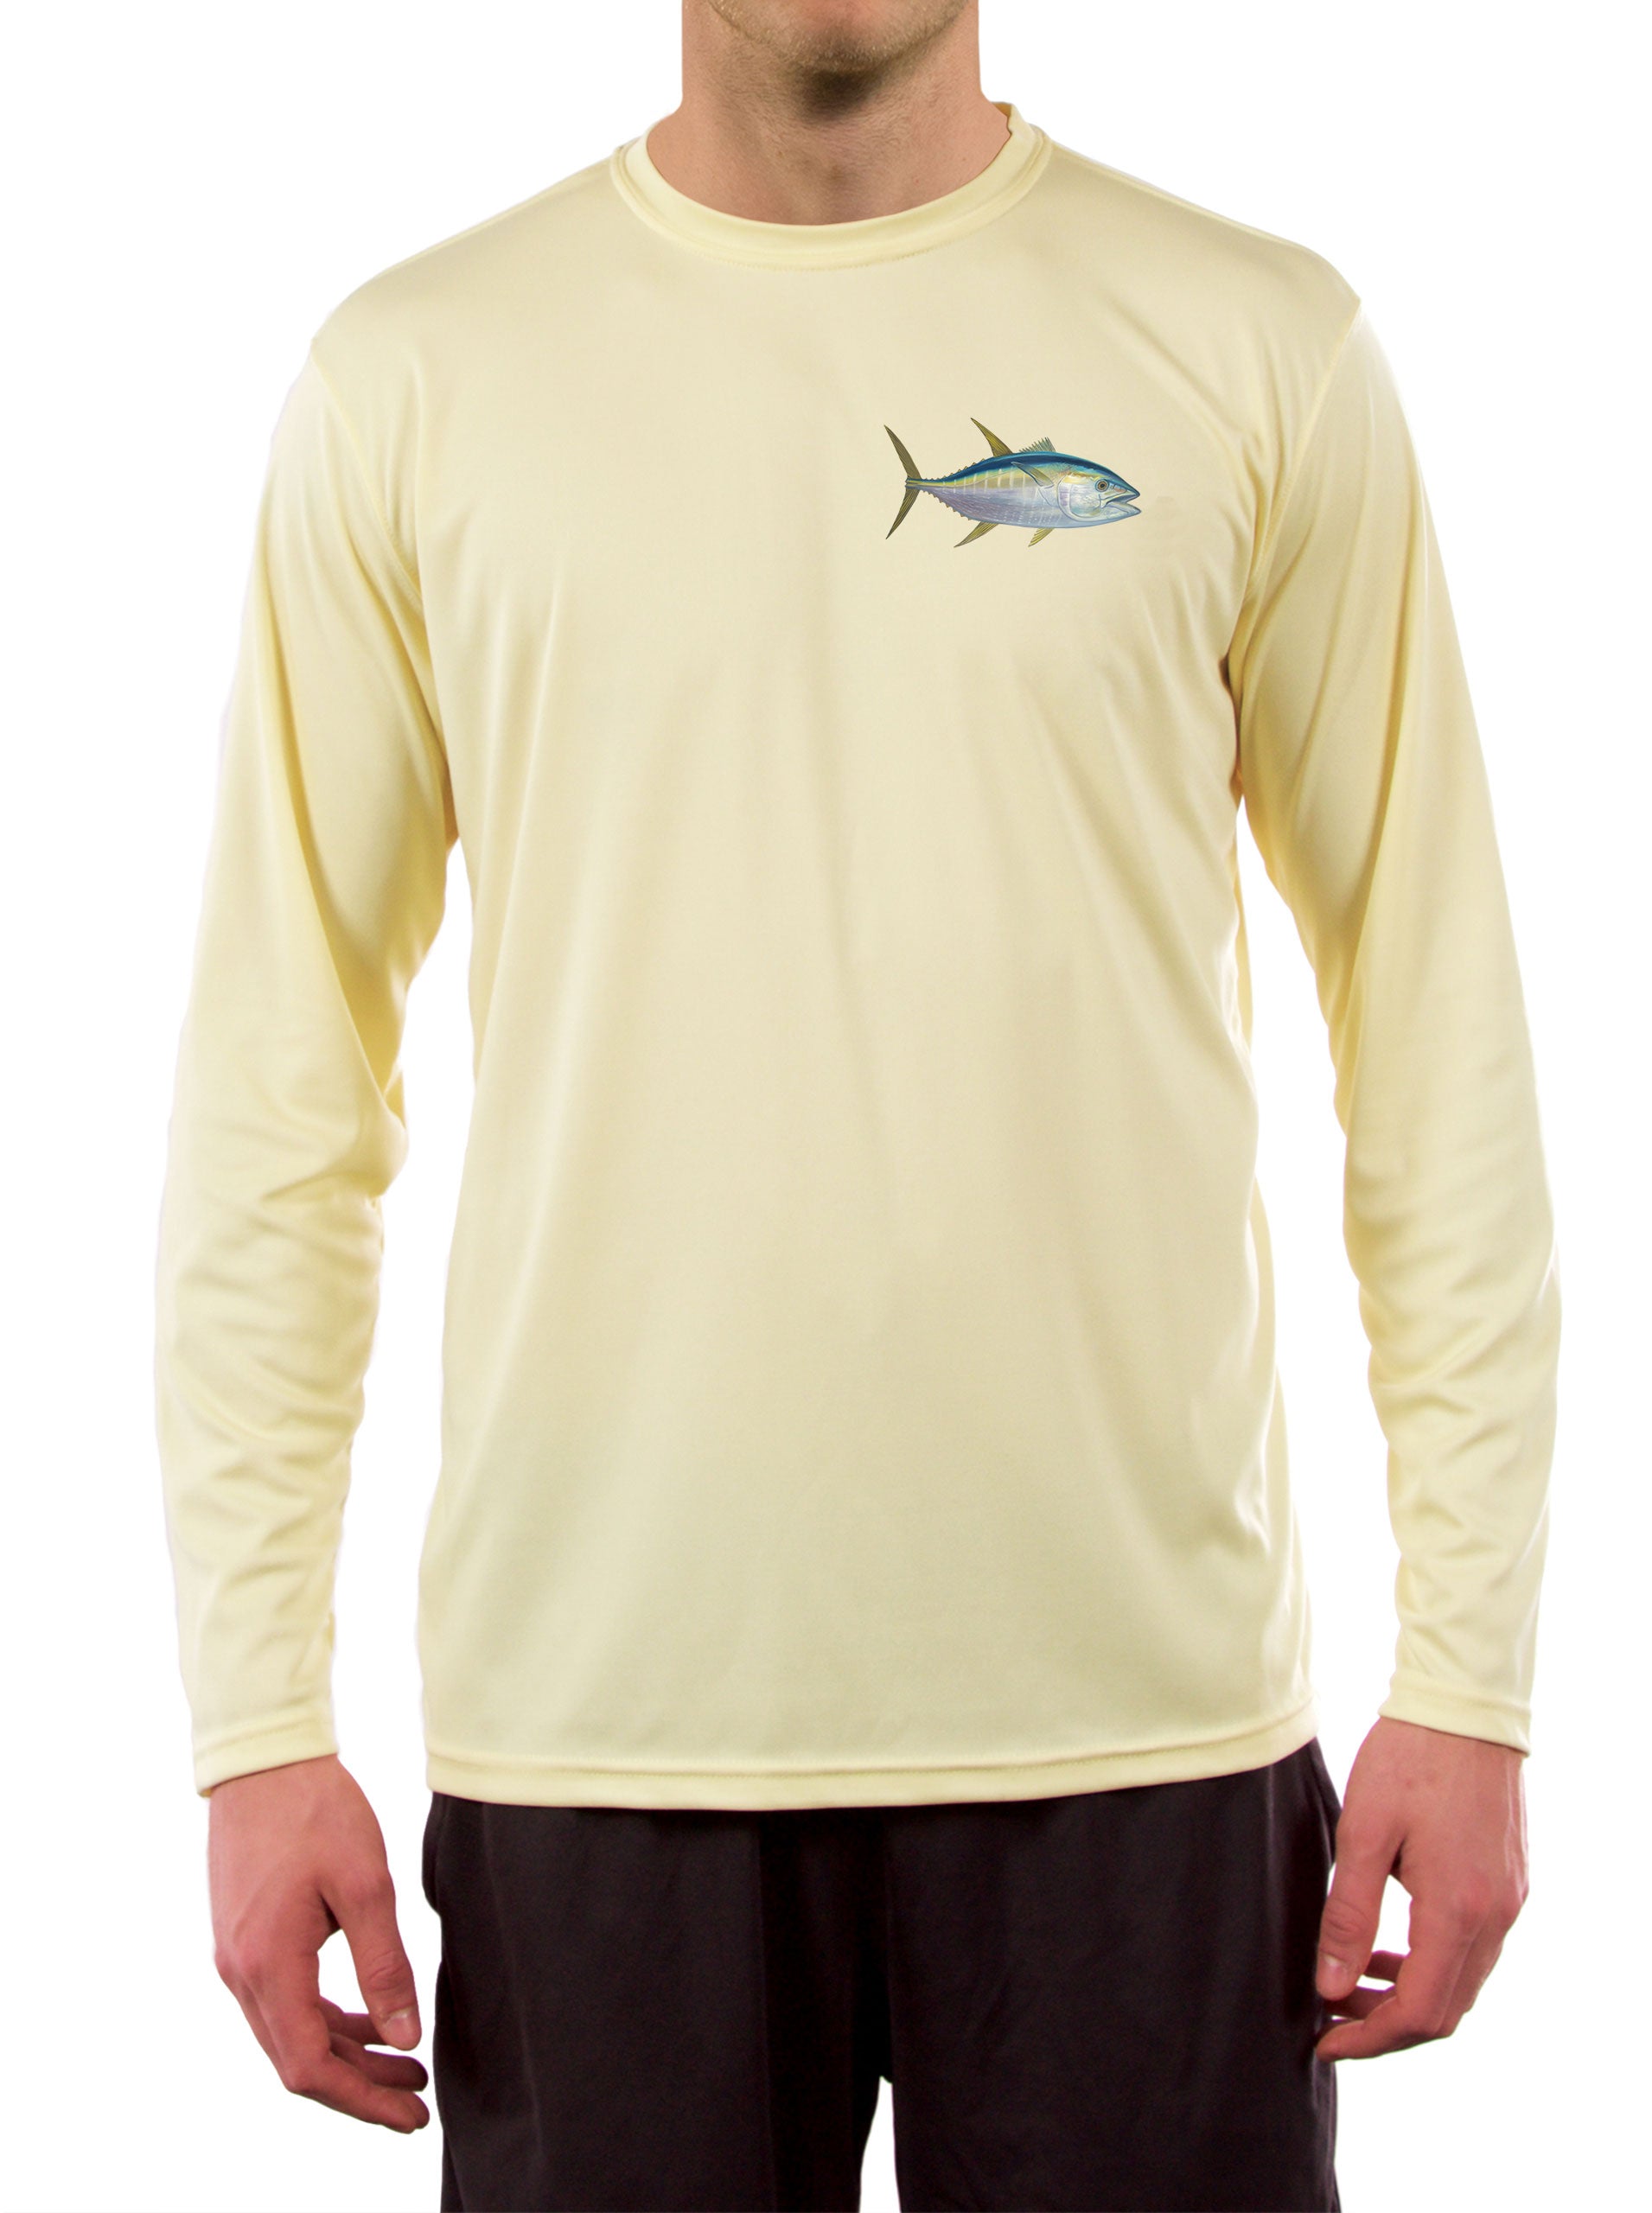 Wicked Tuna Fishing Shirts for Men Long Sleeve, Moisture Wicking